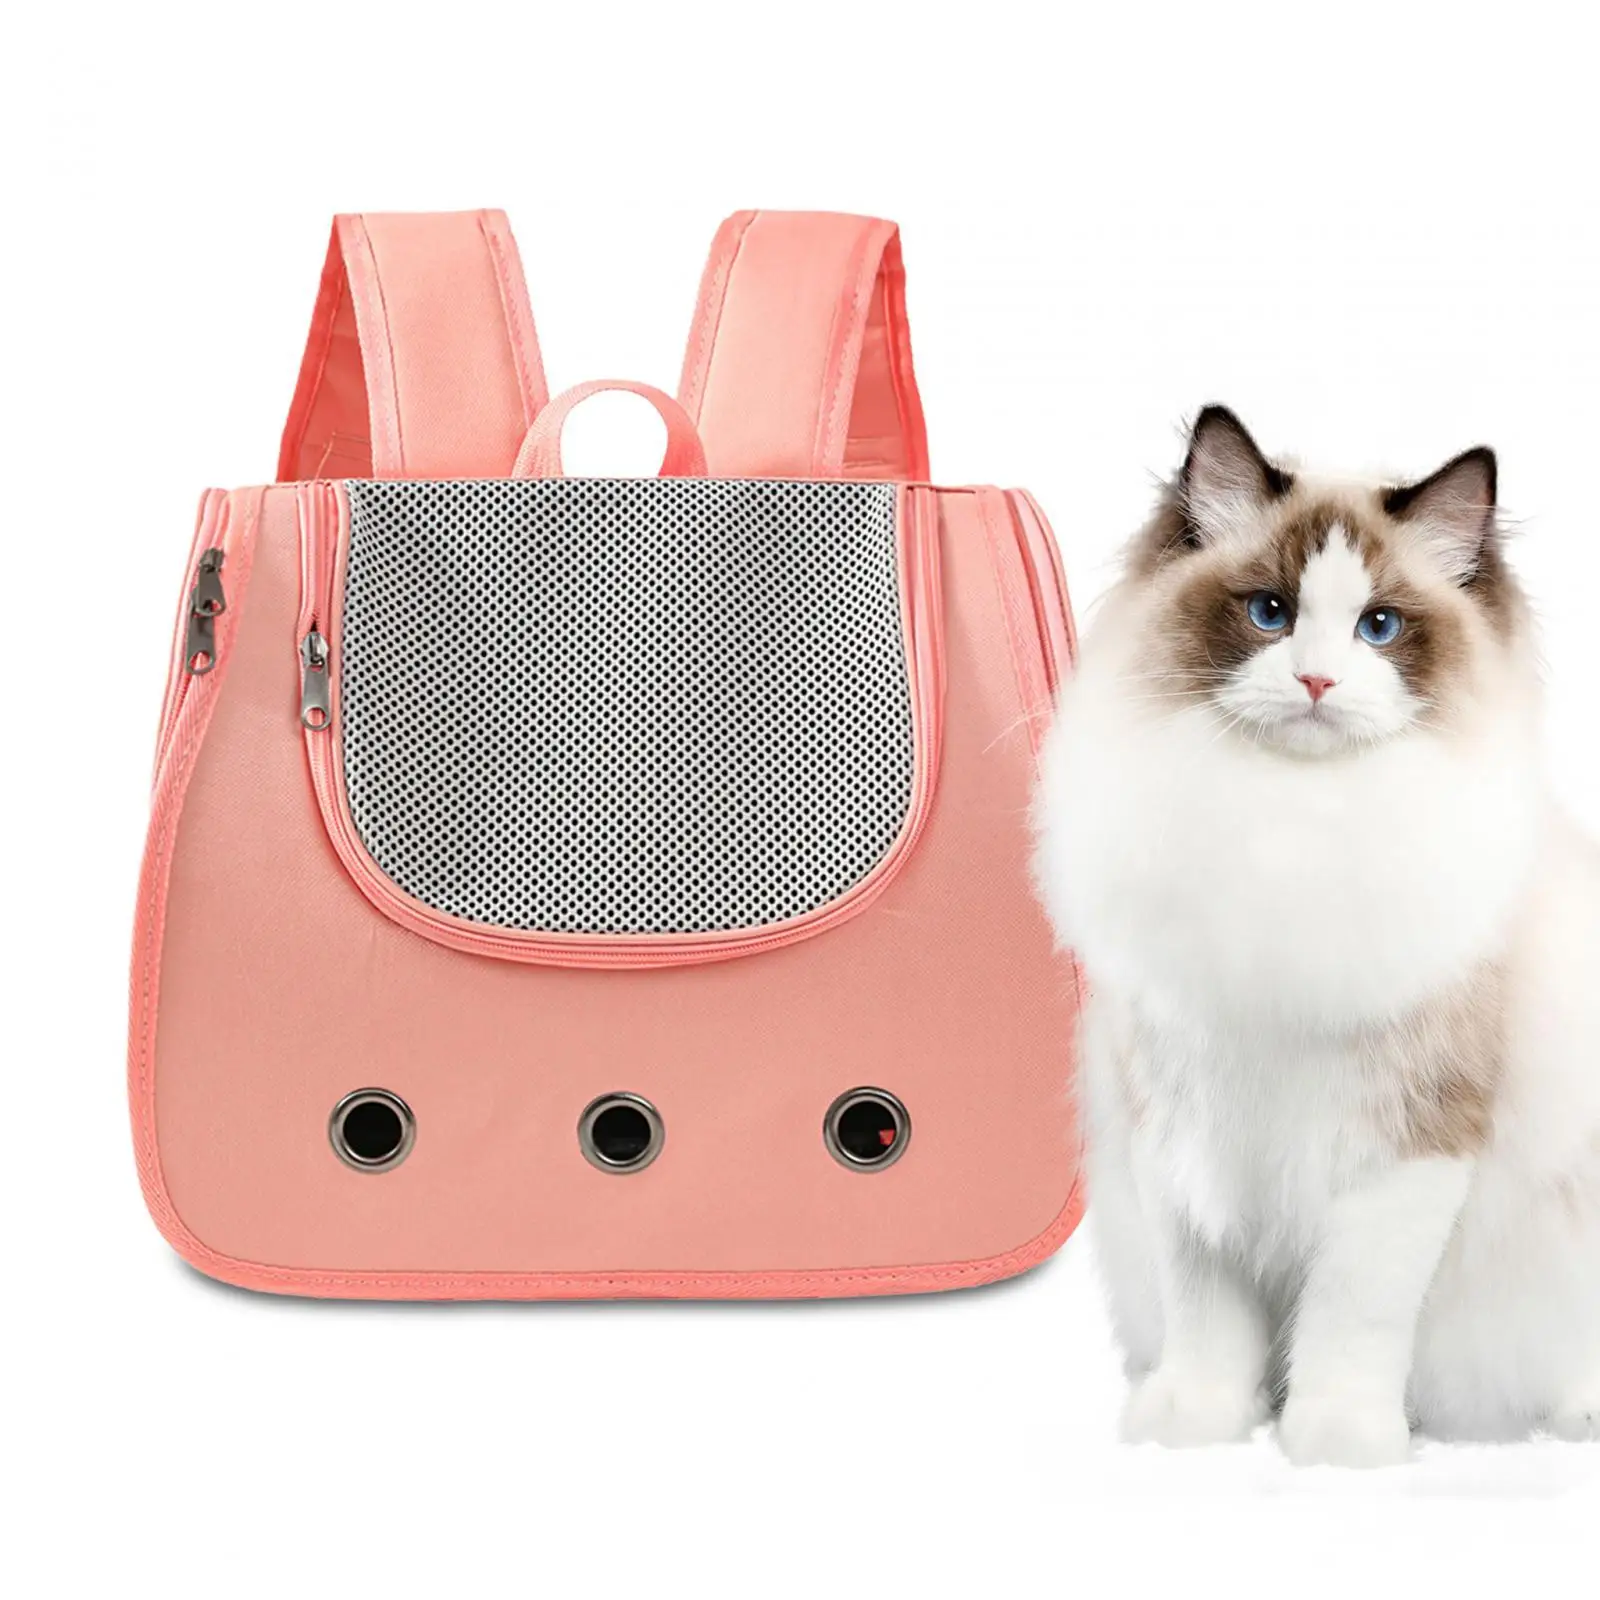 Cat Carrier Backpack Breathable Comfortable Adjustable Strap Ventilation Carrying Bag Dog Cat Carrier for Outdoor Hiking Travel